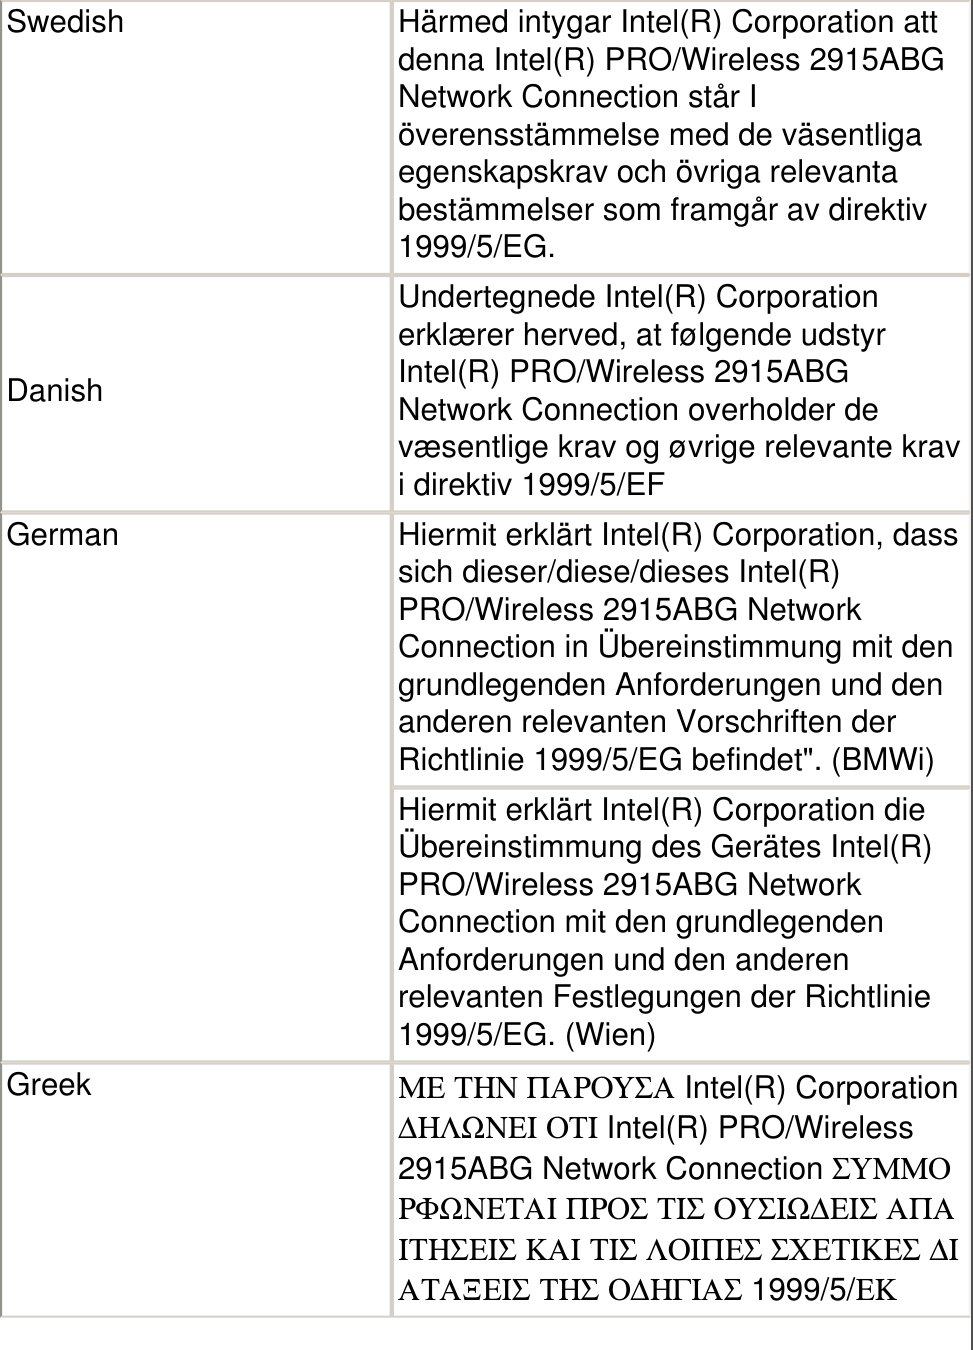 Swedish Härmed intygar Intel(R) Corporation att denna Intel(R) PRO/Wireless 2915ABG Network Connection står I överensstämmelse med de väsentliga egenskapskrav och övriga relevanta bestämmelser som framgår av direktiv 1999/5/EG.DanishUndertegnede Intel(R) Corporation erklærer herved, at følgende udstyr Intel(R) PRO/Wireless 2915ABG Network Connection overholder de væsentlige krav og øvrige relevante krav i direktiv 1999/5/EFGerman Hiermit erklärt Intel(R) Corporation, dass sich dieser/diese/dieses Intel(R) PRO/Wireless 2915ABG Network Connection in Übereinstimmung mit den grundlegenden Anforderungen und den anderen relevanten Vorschriften der Richtlinie 1999/5/EG befindet&quot;. (BMWi)Hiermit erklärt Intel(R) Corporation die Übereinstimmung des Gerätes Intel(R) PRO/Wireless 2915ABG Network Connection mit den grundlegenden Anforderungen und den anderen relevanten Festlegungen der Richtlinie 1999/5/EG. (Wien)Greek ΜΕ ΤΗΝ ΠΑΡΟΥΣΑ Intel(R) Corporation ∆ΗΛΩΝΕΙ ΟΤΙ Intel(R) PRO/Wireless 2915ABG Network Connection ΣΥΜΜΟΡΦΩΝΕΤΑΙ ΠΡΟΣ ΤΙΣ ΟΥΣΙΩ∆ΕΙΣ ΑΠΑΙΤΗΣΕΙΣ ΚΑΙ ΤΙΣ ΛΟΙΠΕΣ ΣΧΕΤΙΚΕΣ ∆ΙΑΤΑΞΕΙΣ ΤΗΣ Ο∆ΗΓΙΑΣ 1999/5/ΕΚ